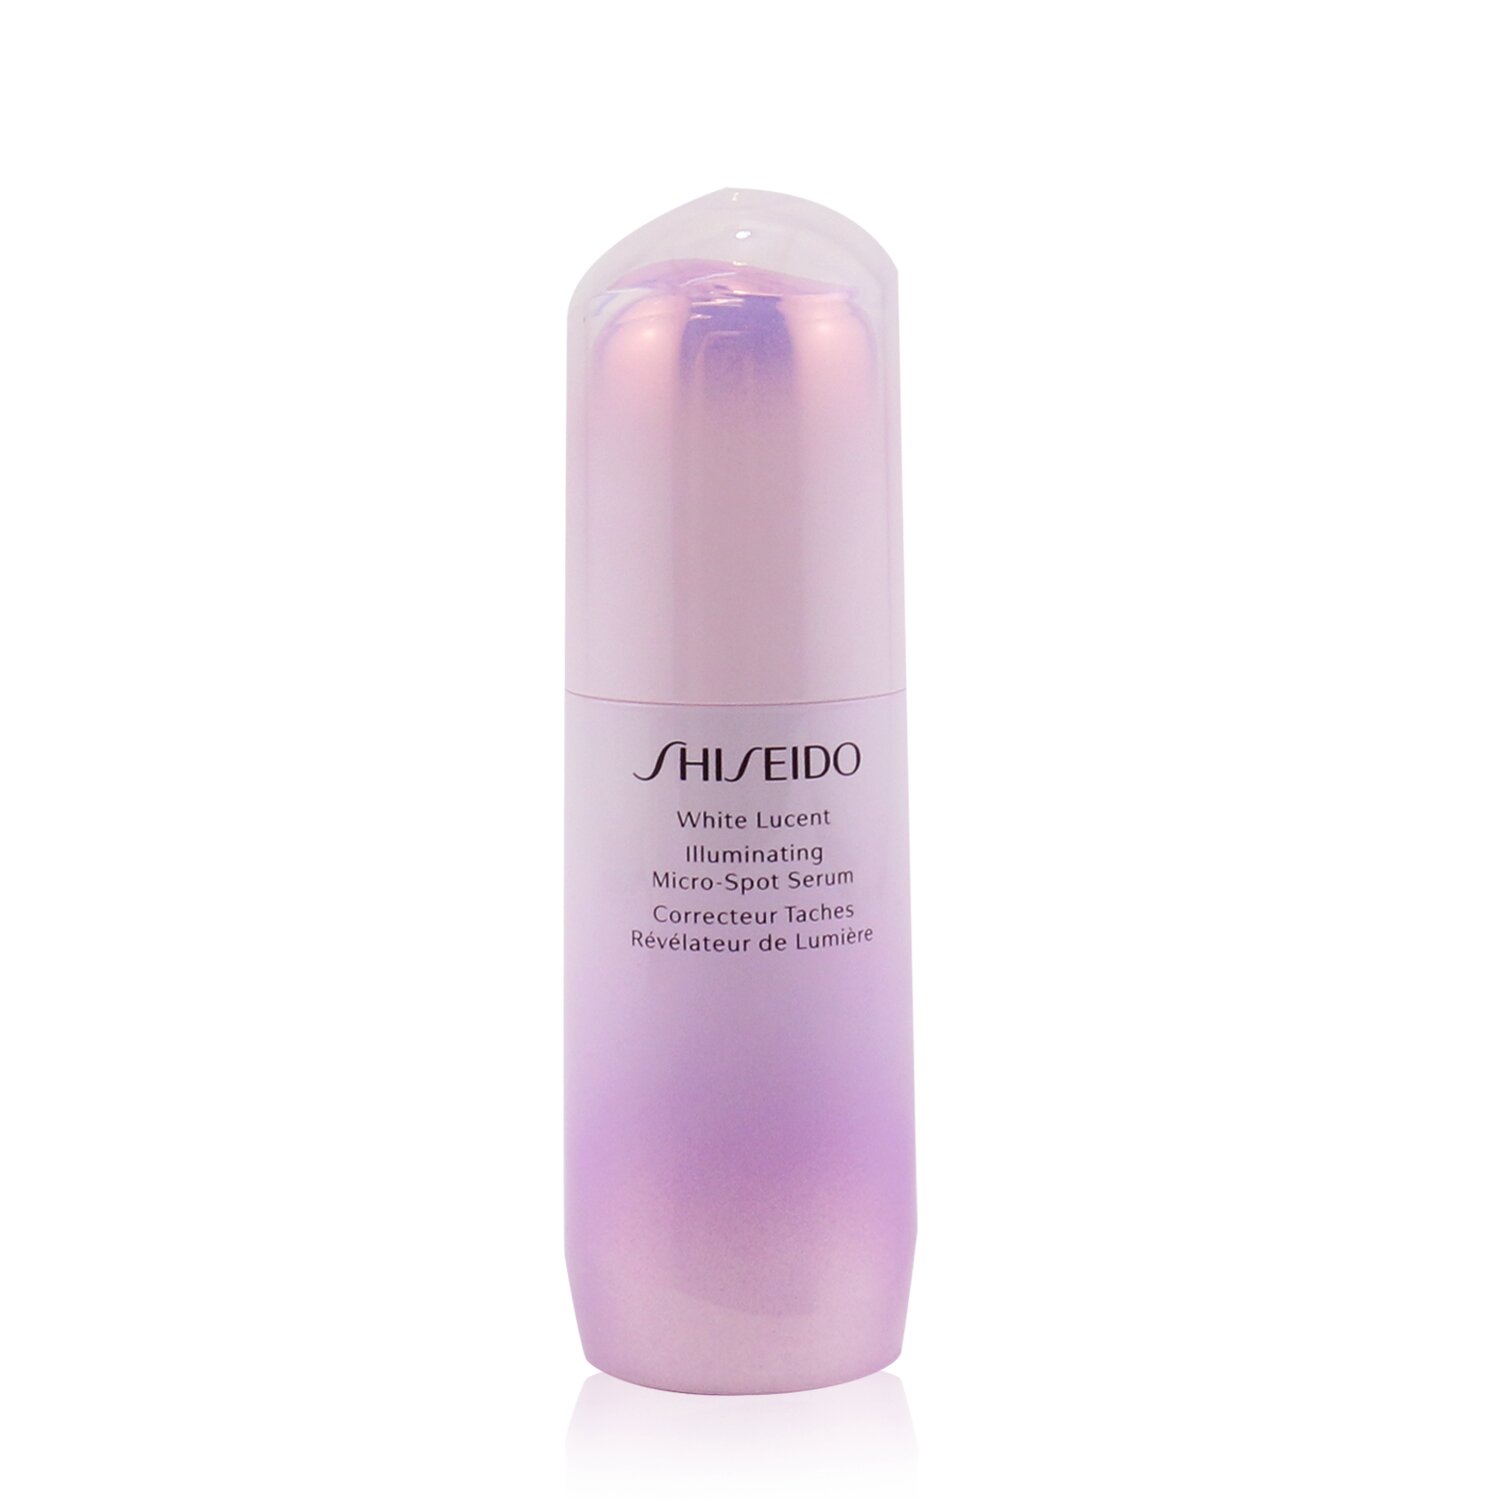 Shiseido 資生堂 精華液 臉部保養 美容保養與彩妝 Rakuten樂天市場